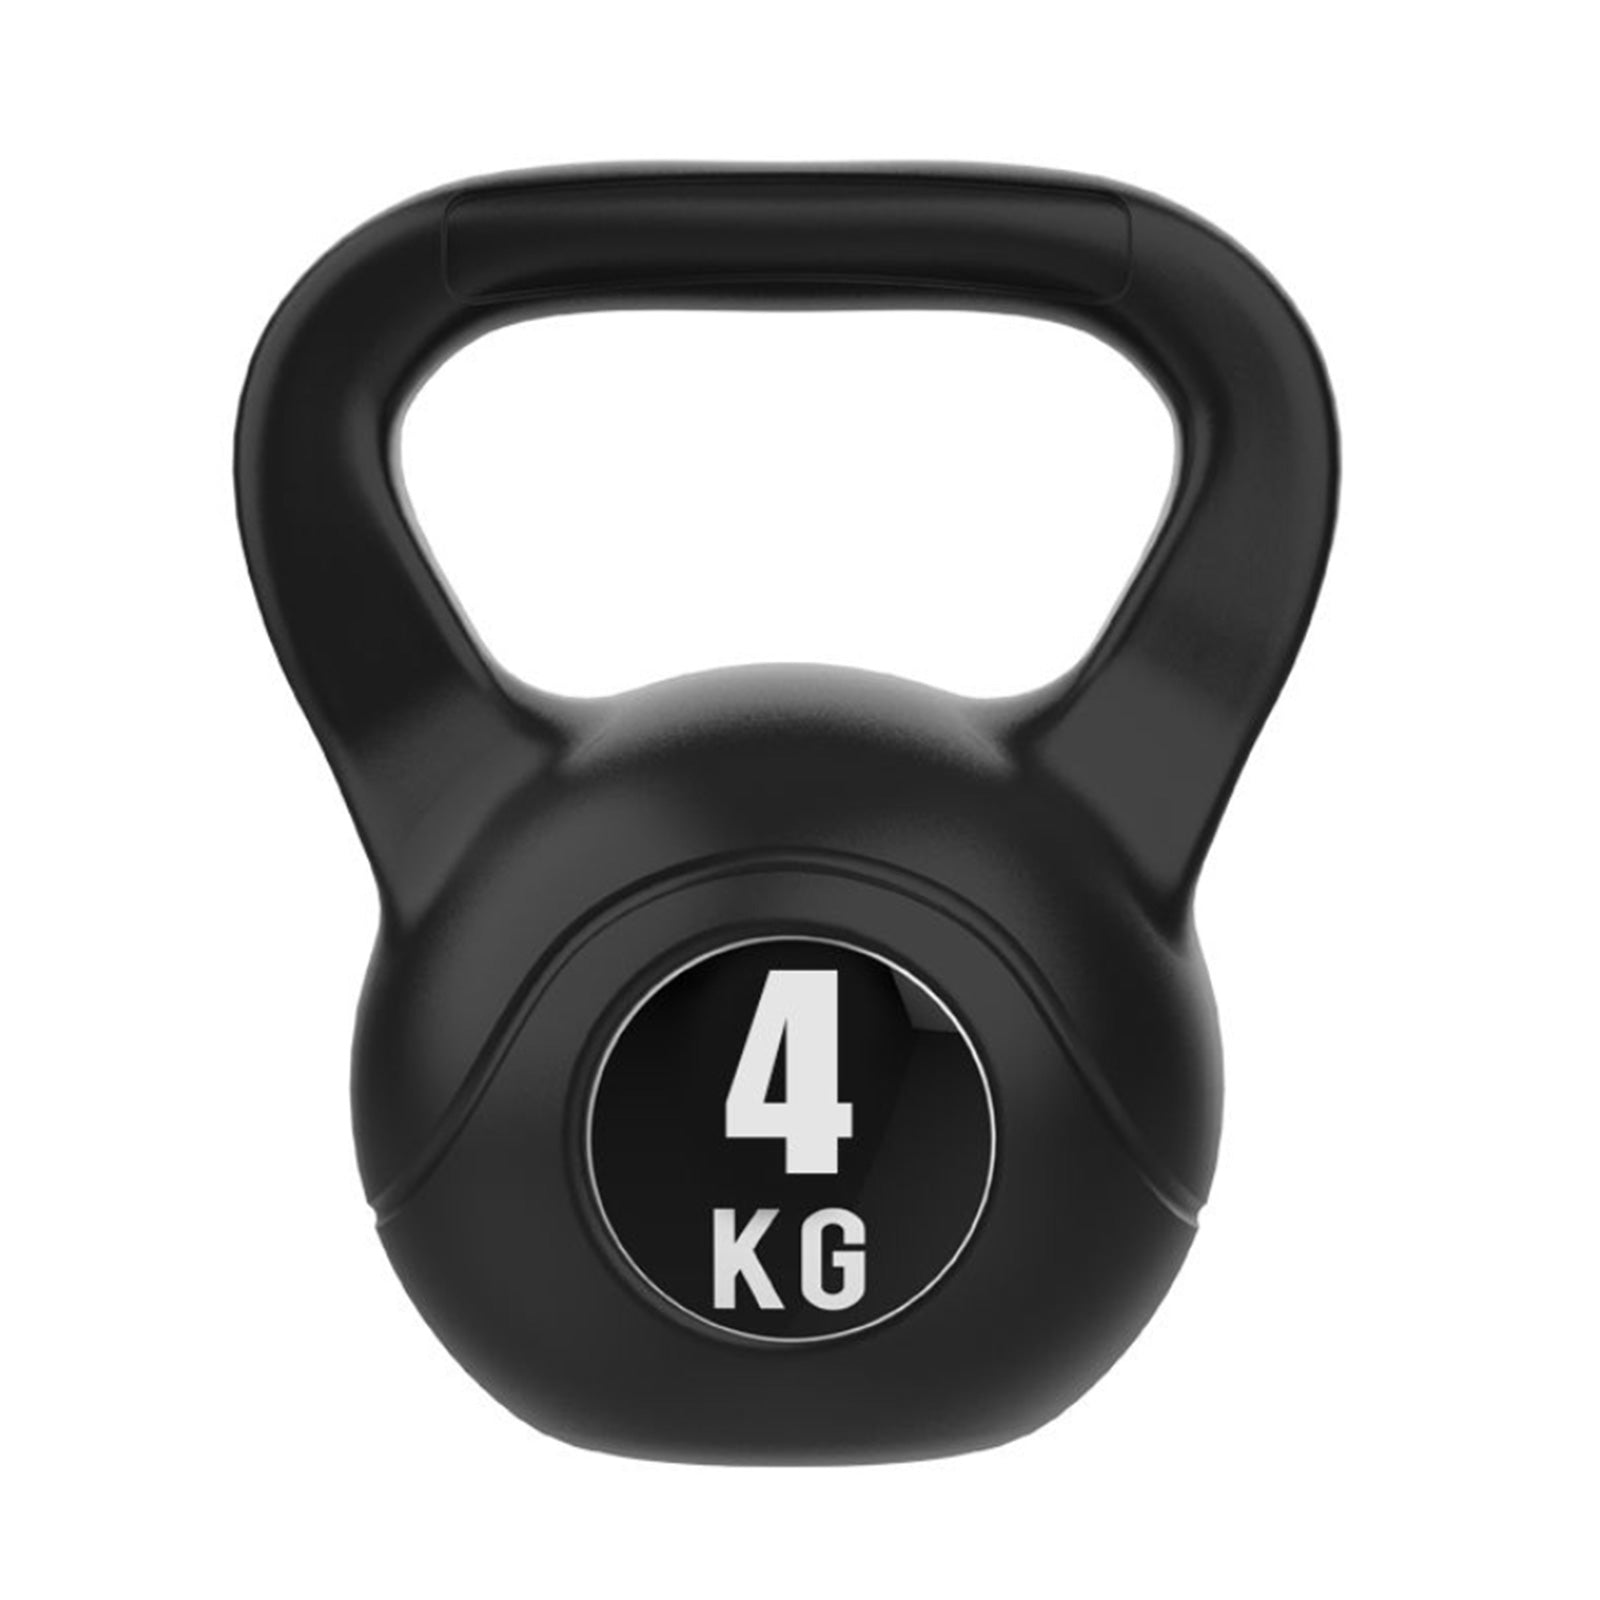 JMQ 4-12KG Kettlebell Kettle Bell Weight Exercise Home Gym Workout - 4KG